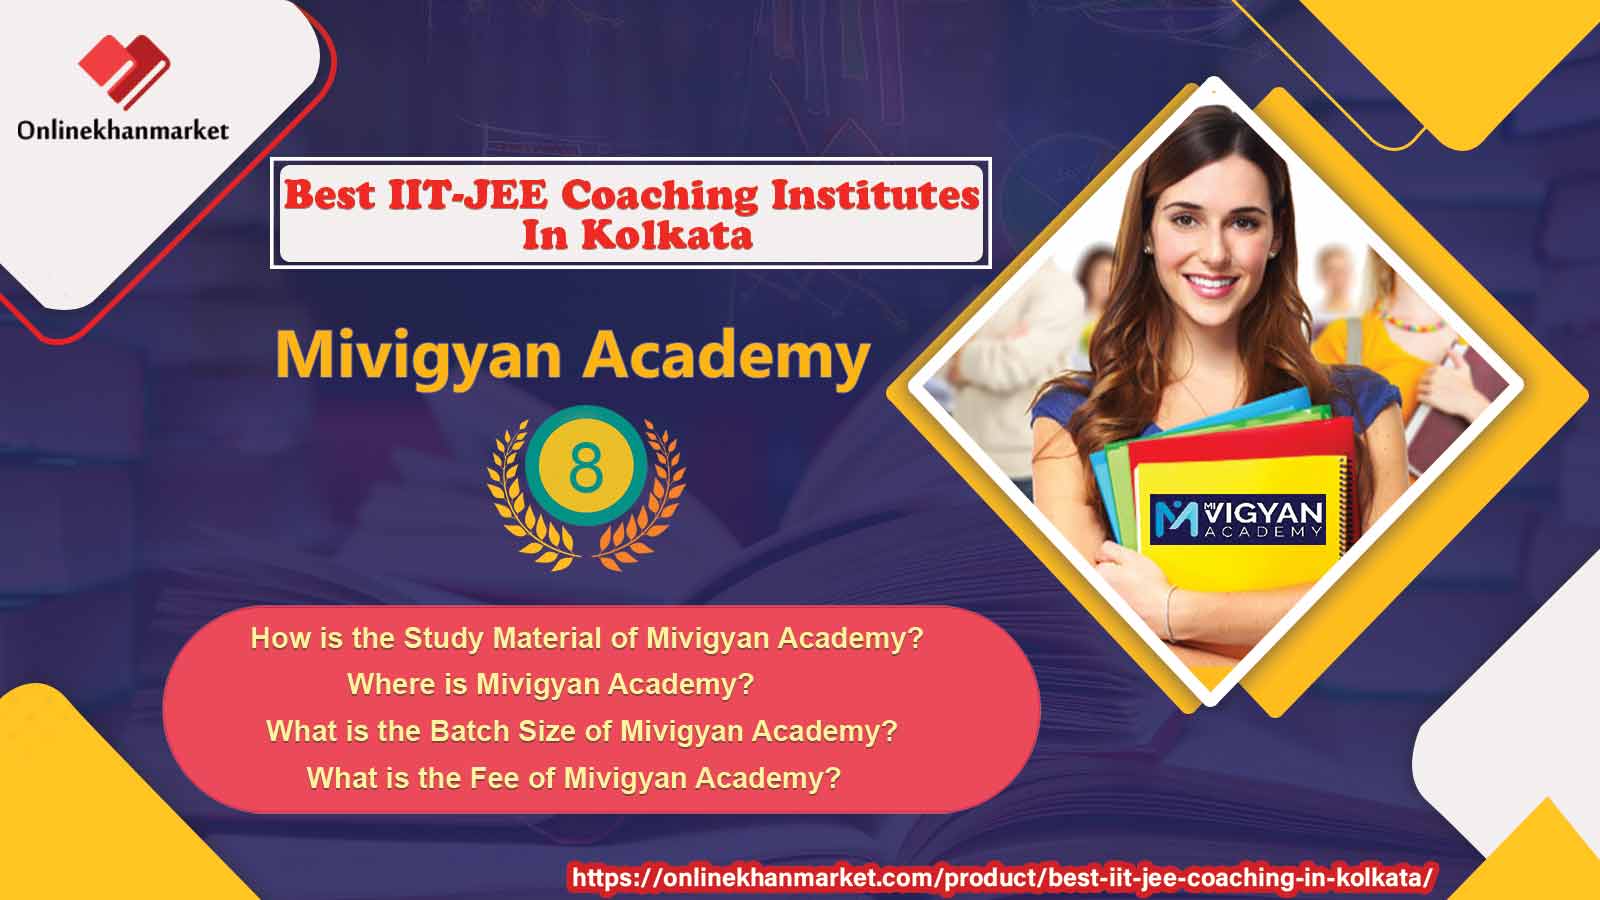 Best IIT JEE Coaching in Kolkata